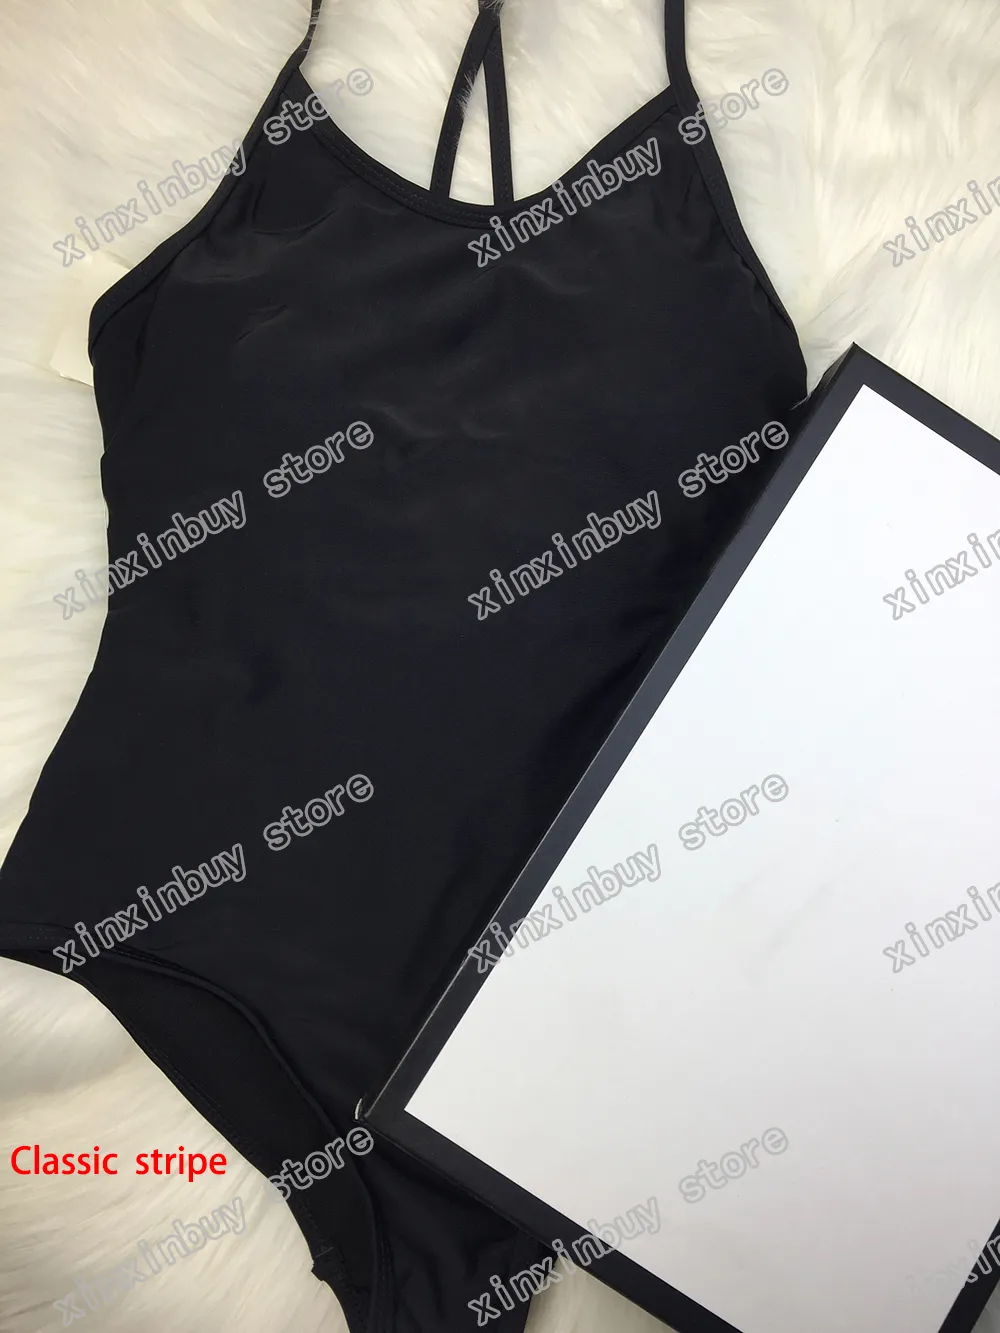 21ss Italian Bikini Spring Summer chest Classic stripe letters printing Womens Swimwear tops high quality white black red 05